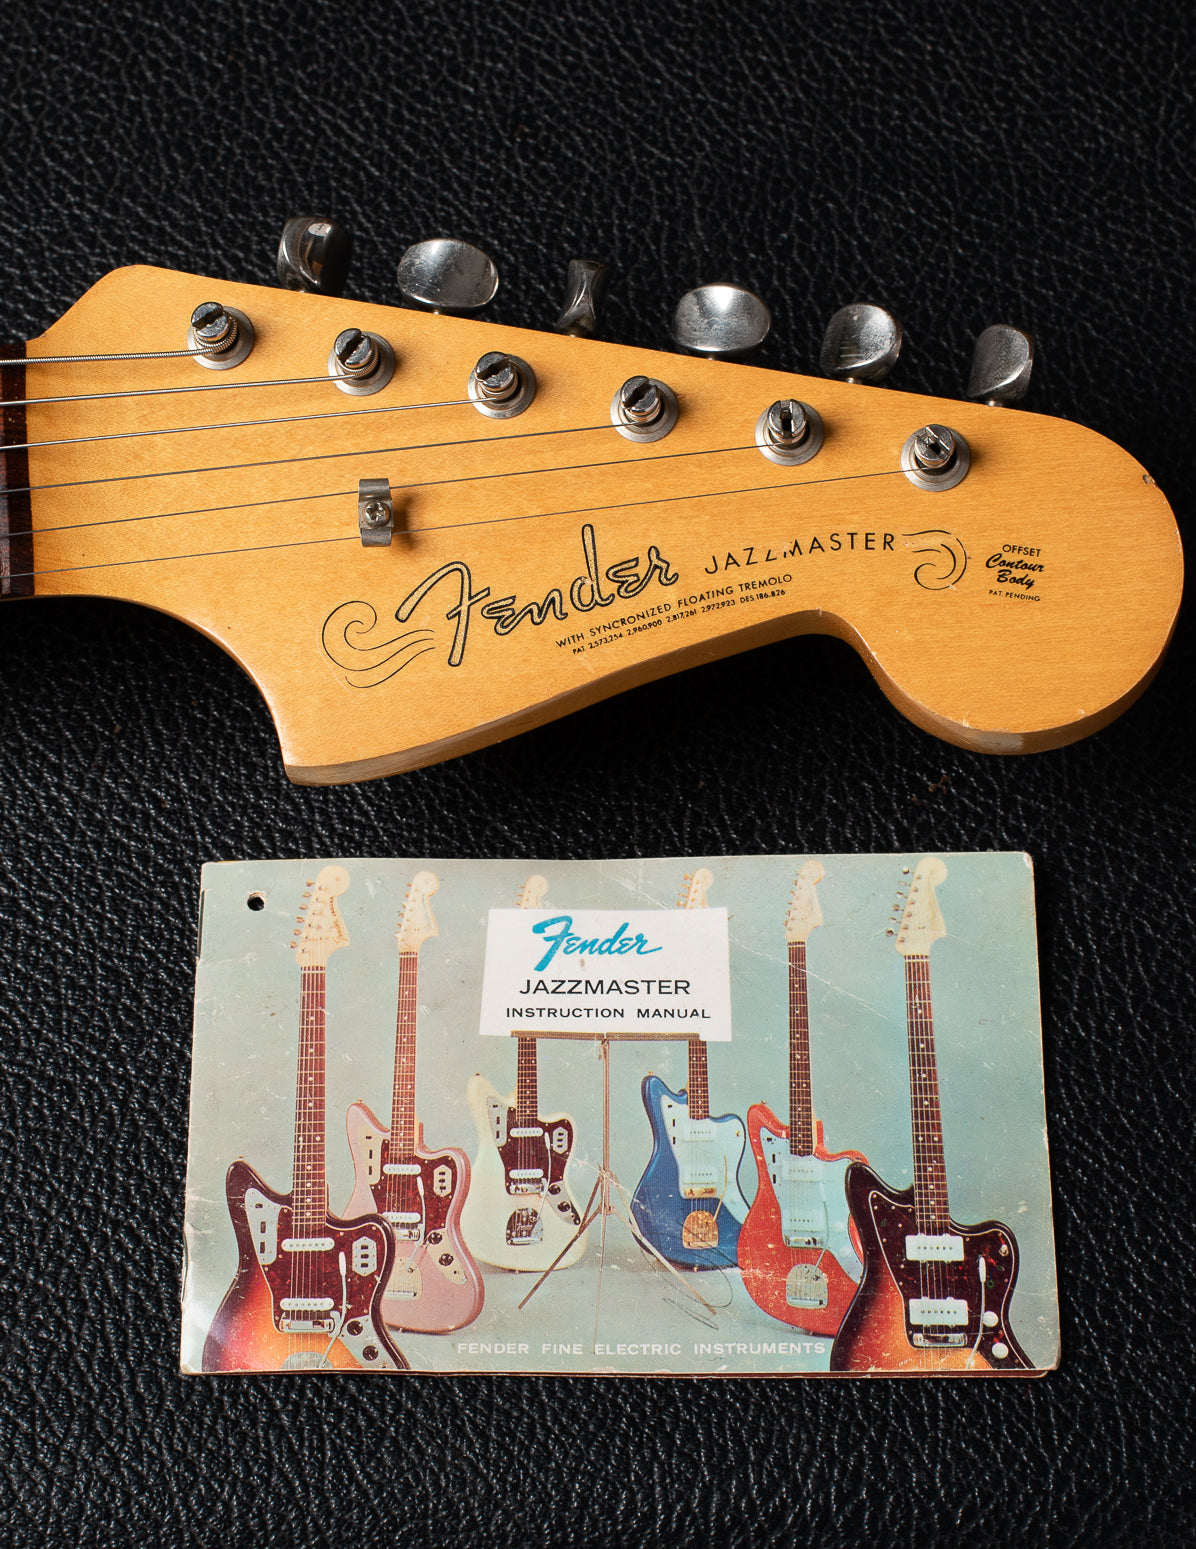 Fender Jazzmaster 1964 headstock with original hang tag